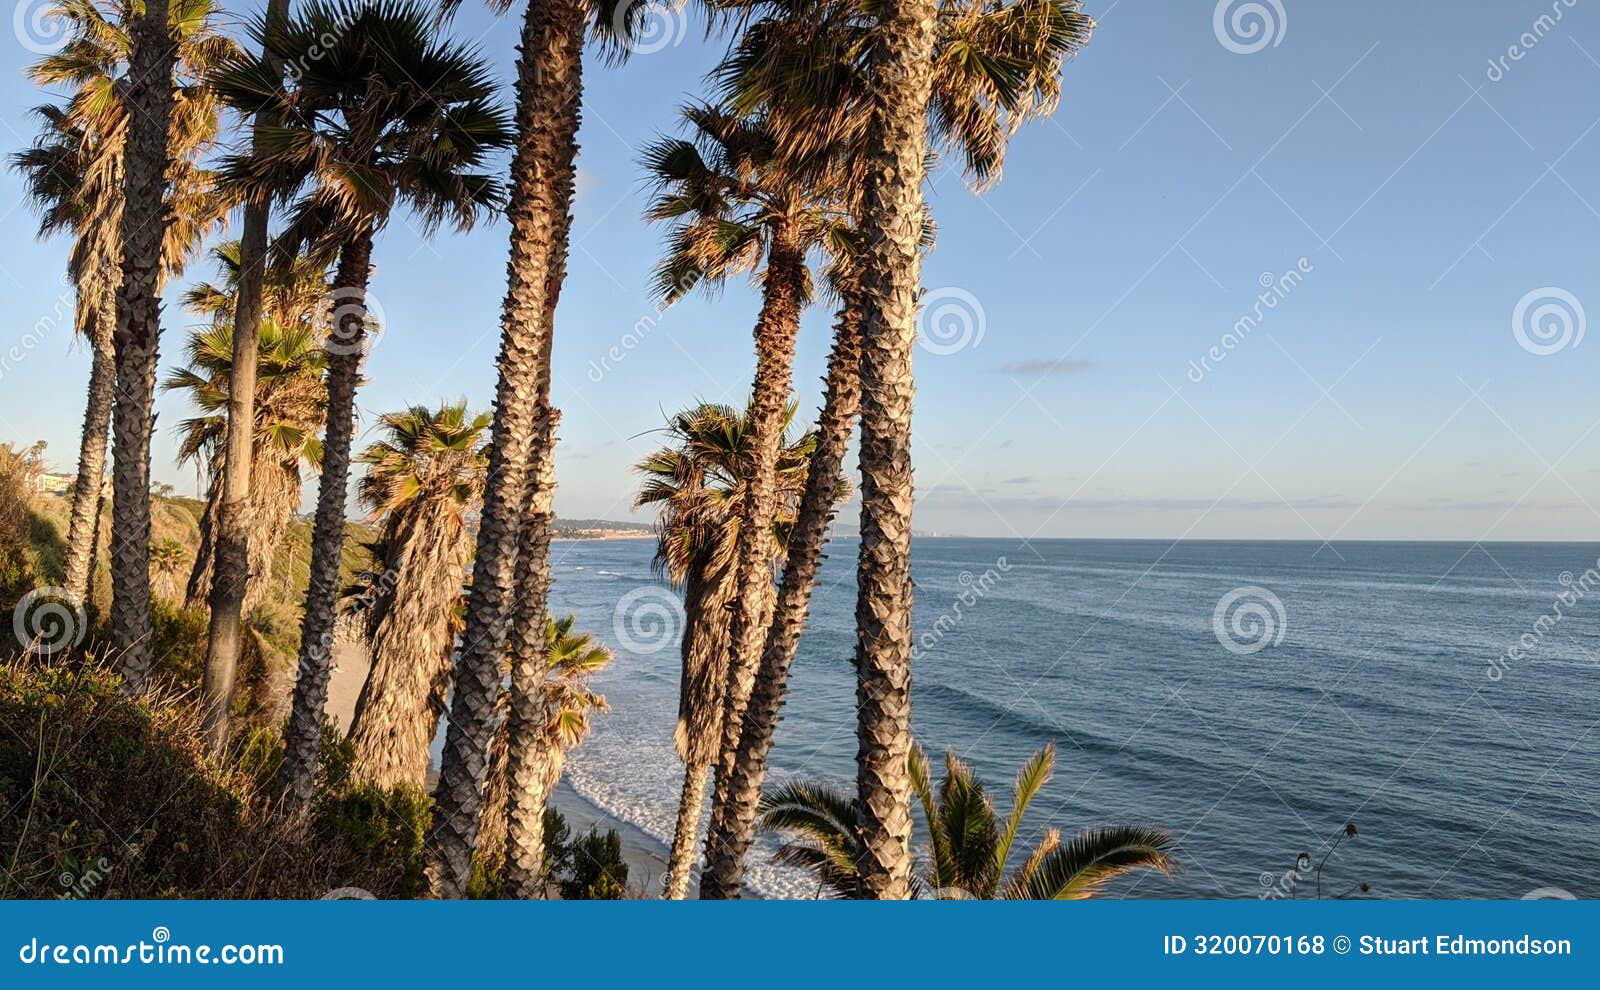 Southern California Beaches Near San Diego. Stock Photo - Image of ...